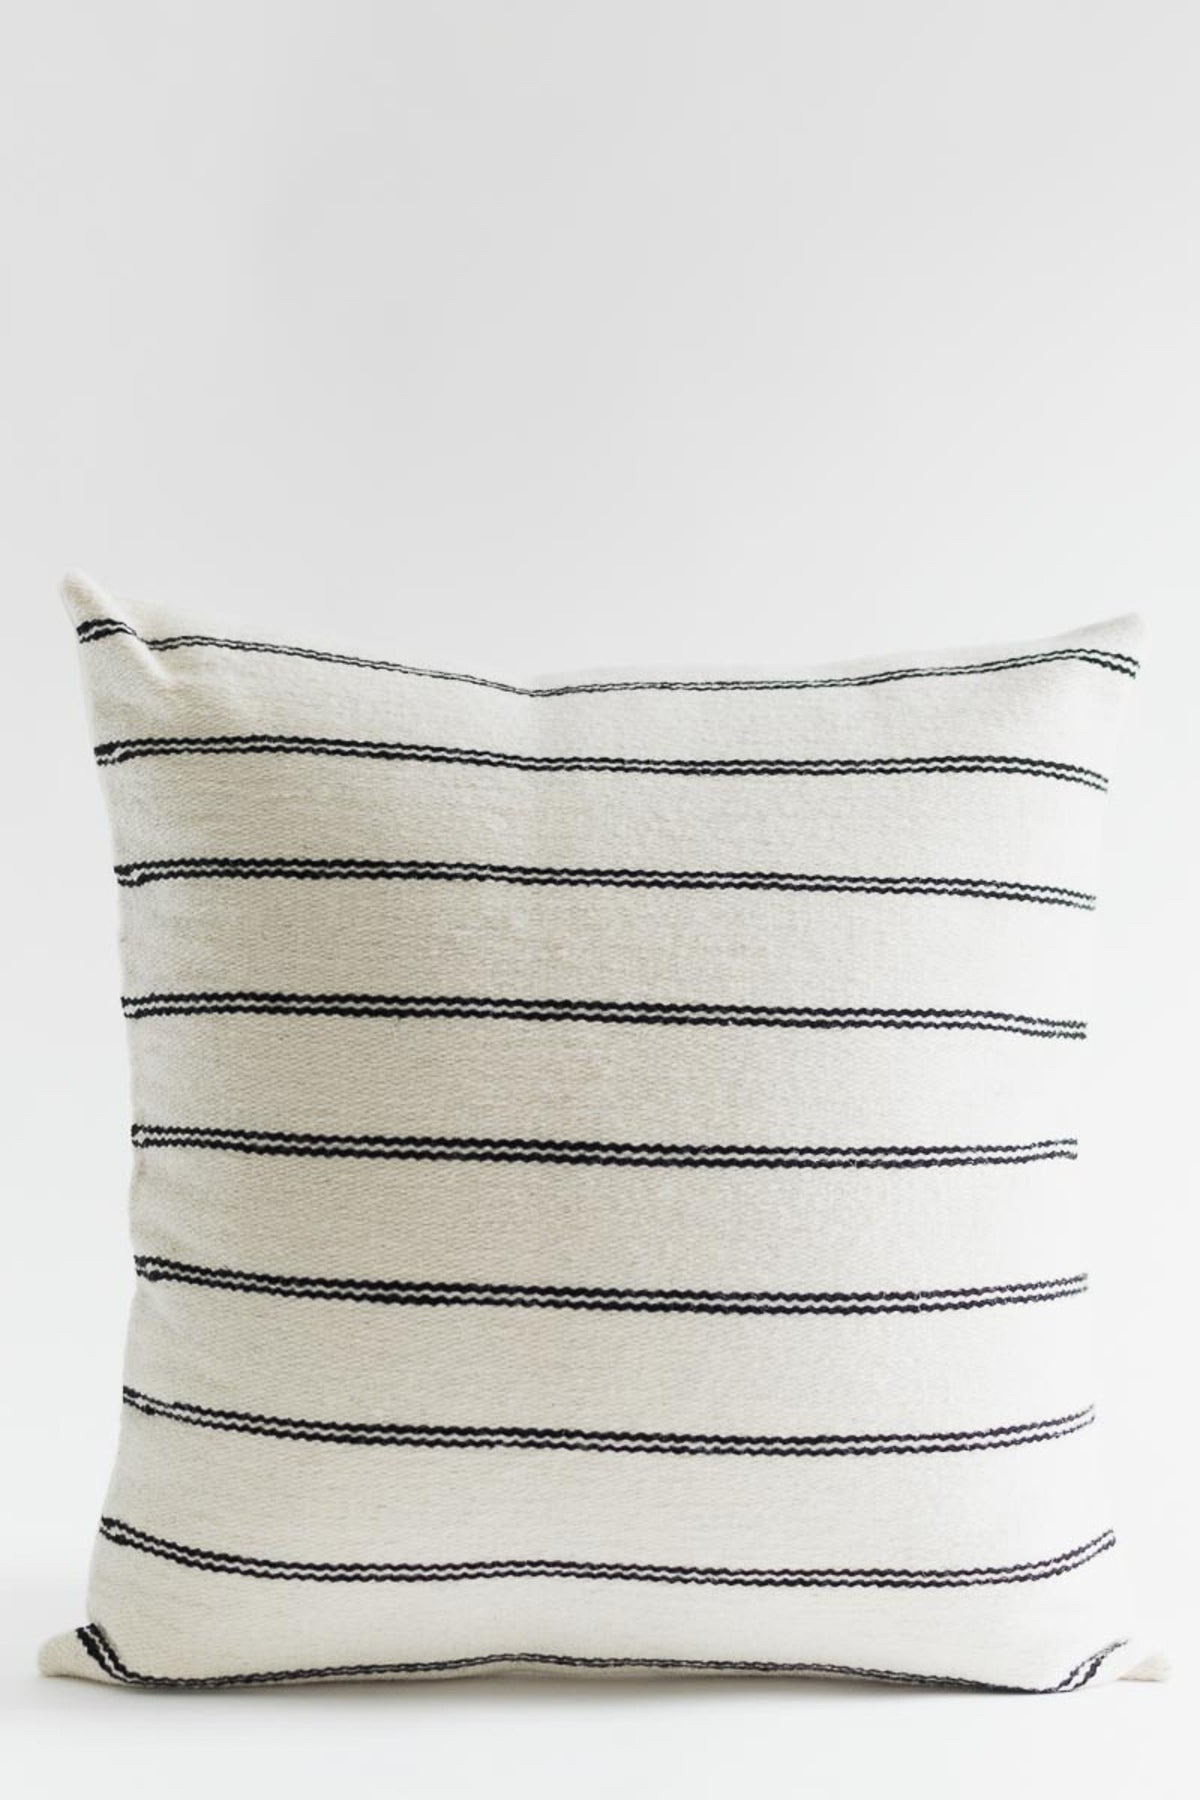 Fair + Simple Wool Pillow Cover in Thin Stripes